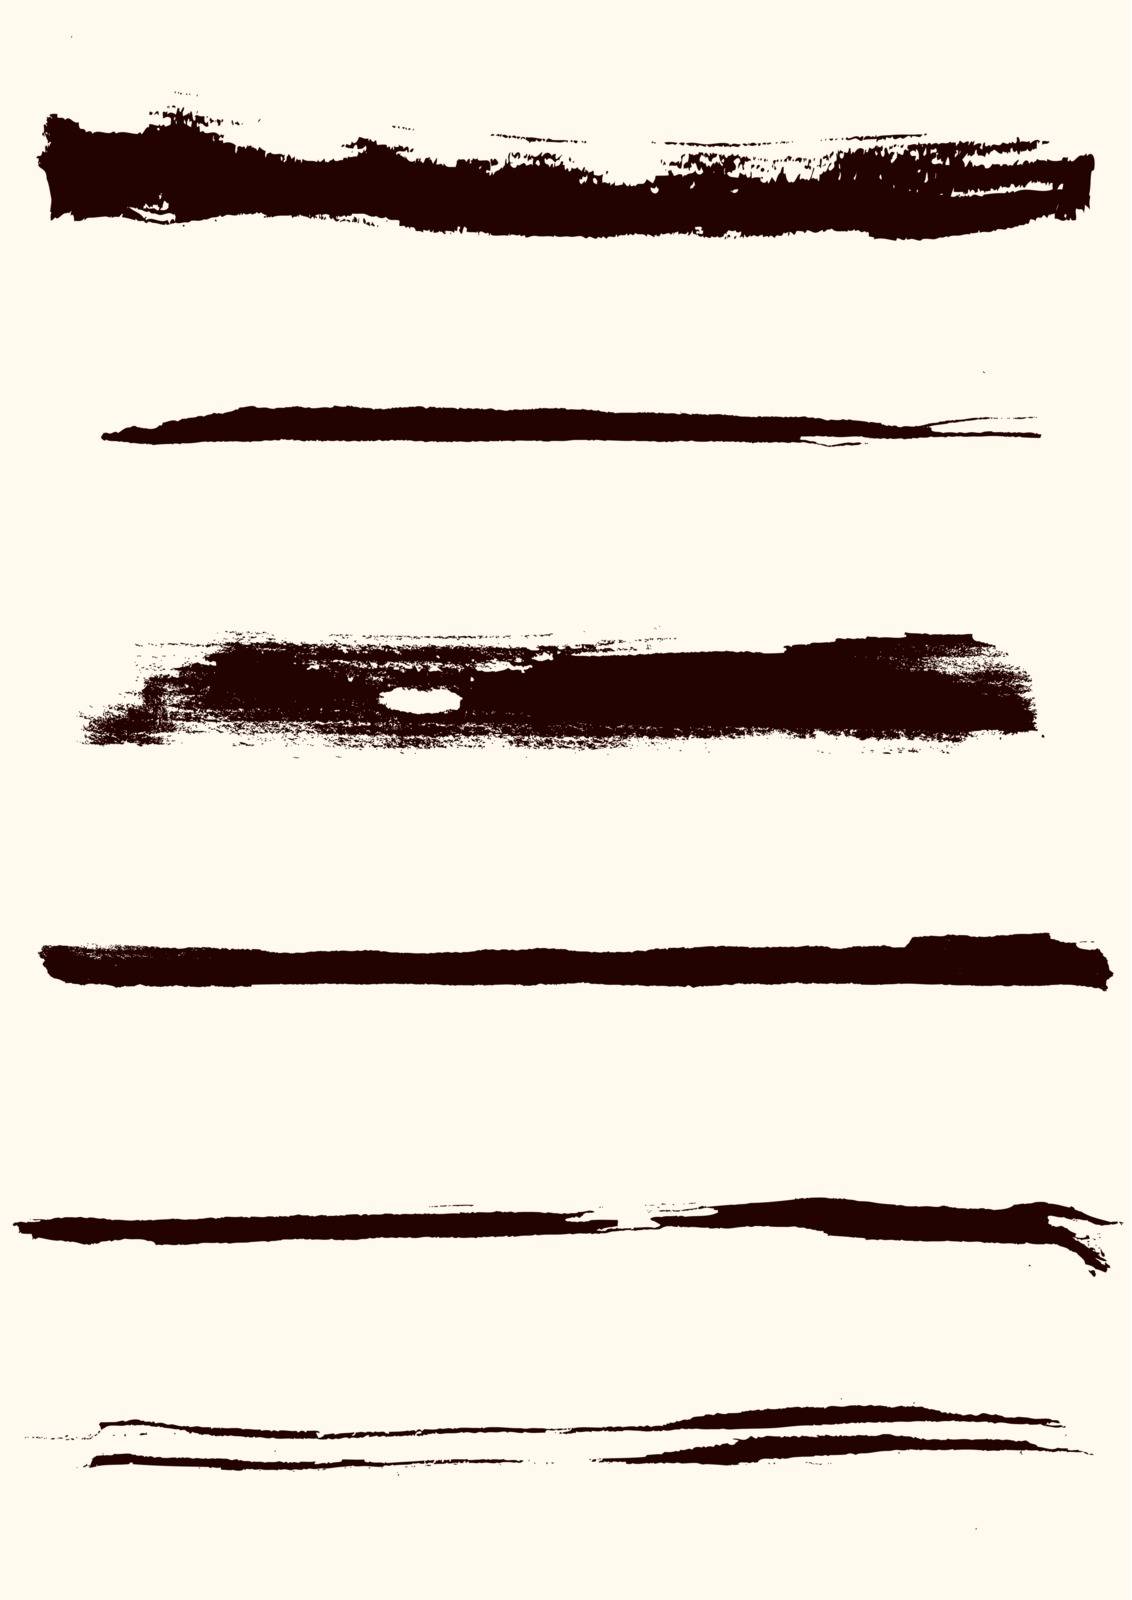 A set of grunge vector brush strokes